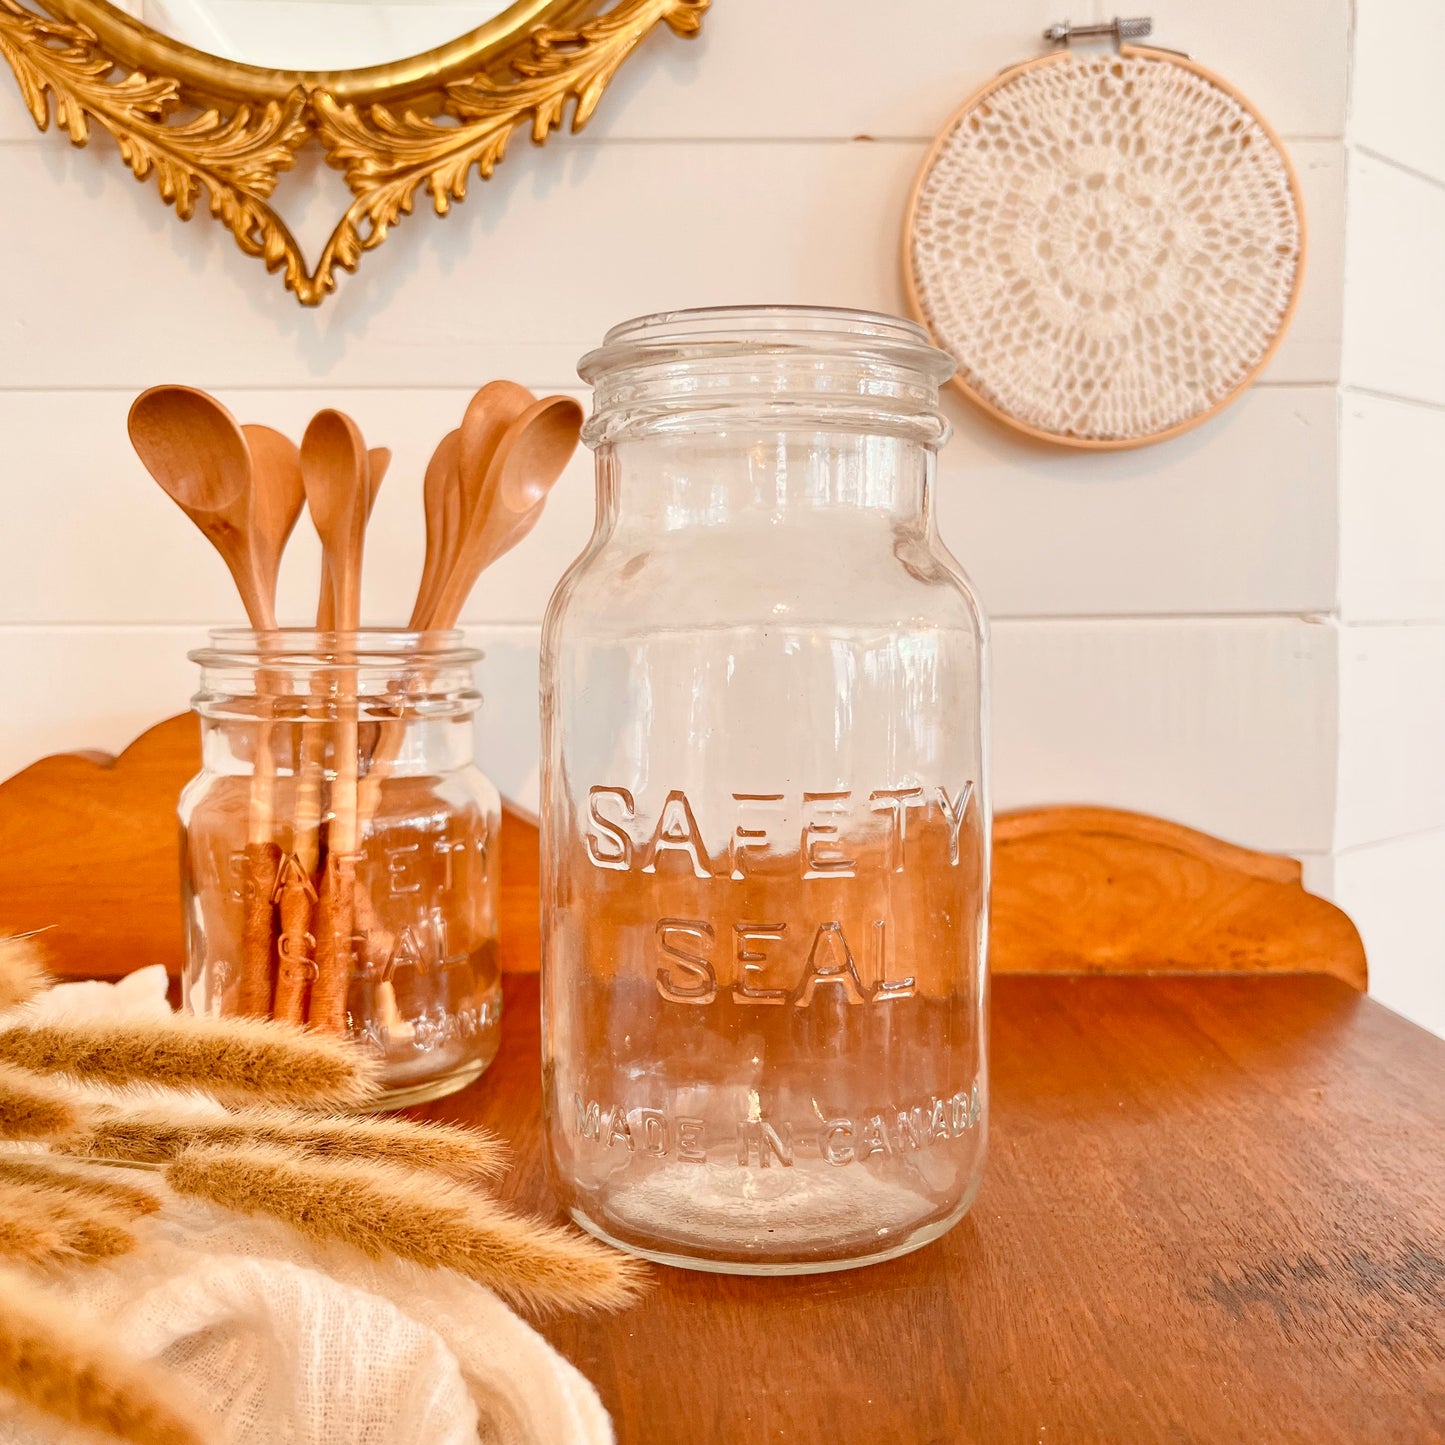 antique glass jar